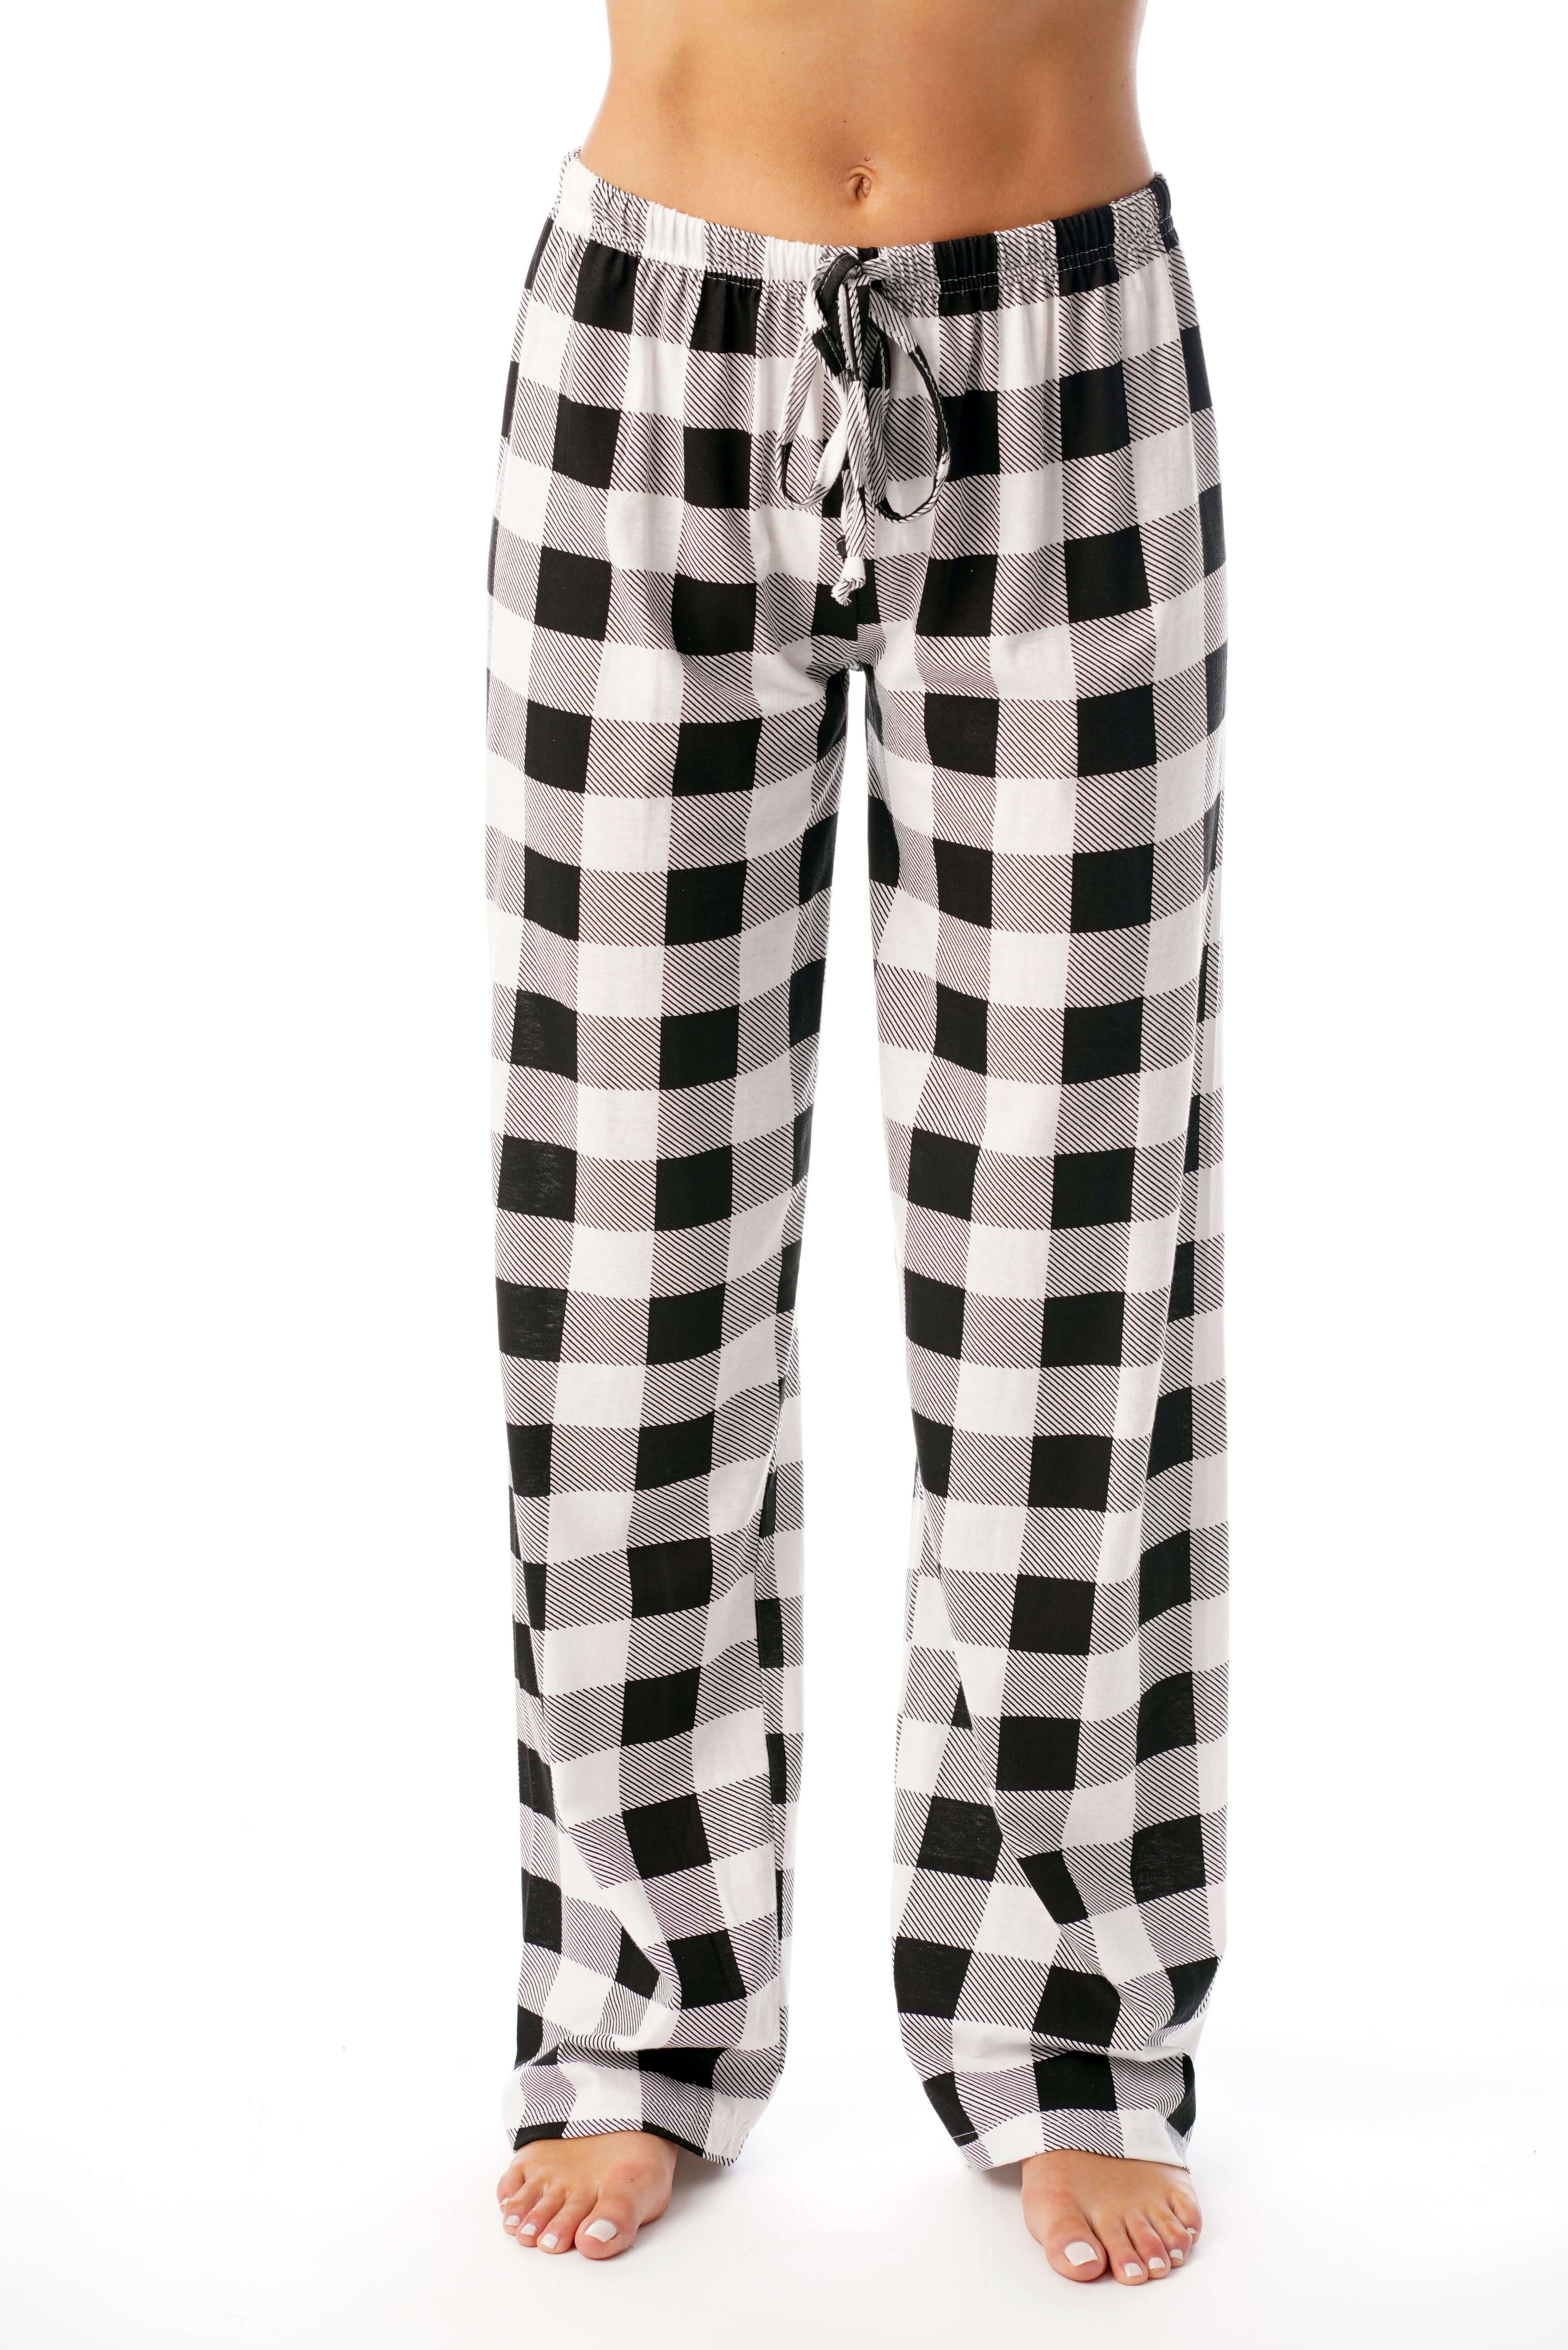 Just Love Women Buffalo Plaid Pajama Pants Sleepwear. (White Black Buffalo  Plaid, Small) 